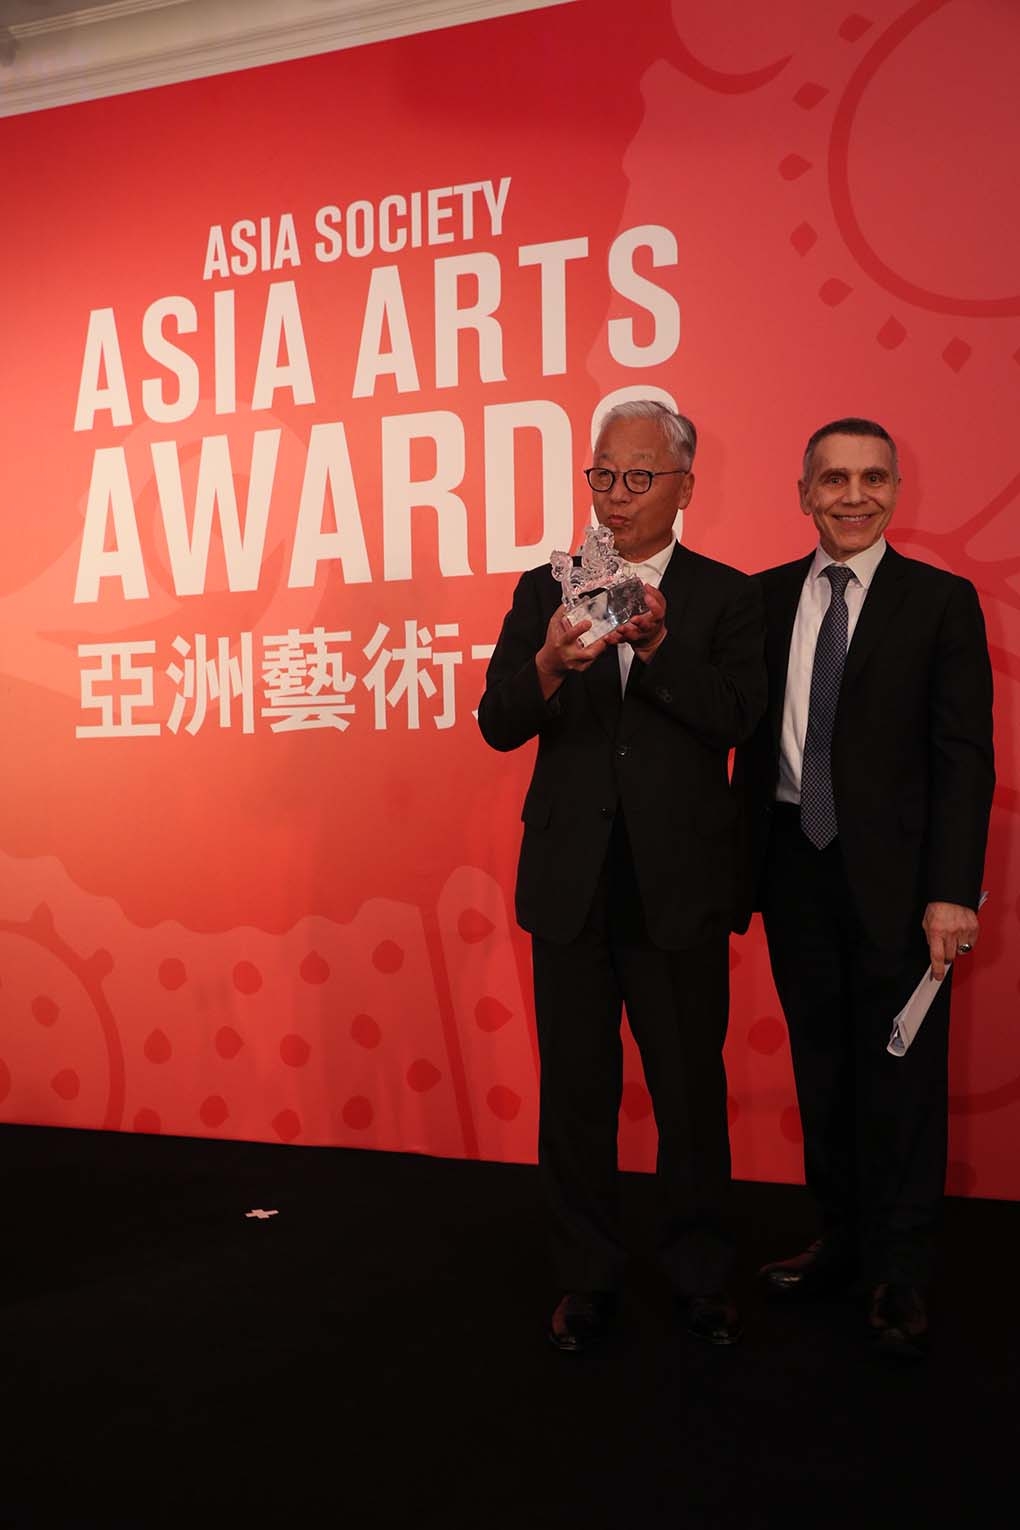 2017 Asia Arts Awards Hong Kong honoree Hiroshi Sugimoto receiving the award from Mitchell R. Julis, Asia Society Global Trustee.